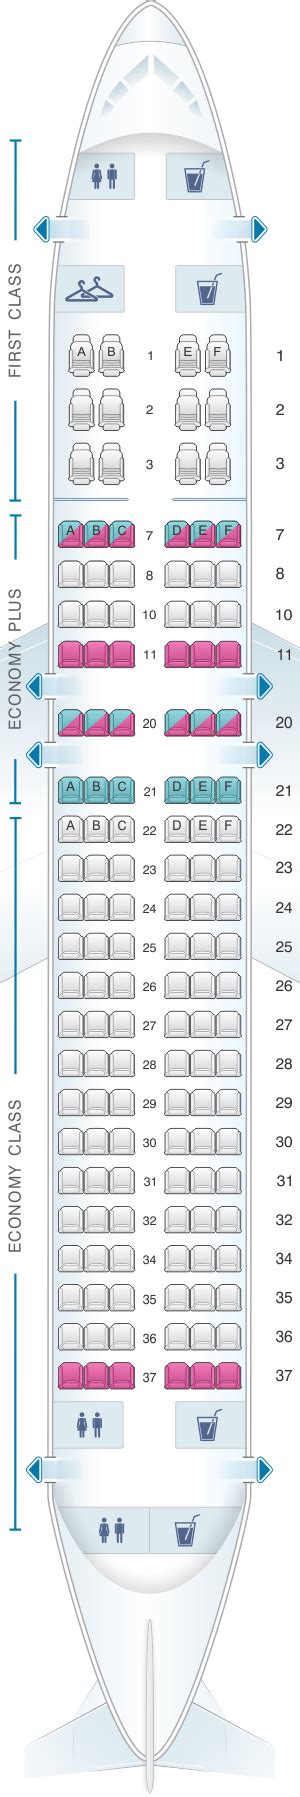 Seat Map United Airlines Airbus A320 Version 1 SeatMaestro Com